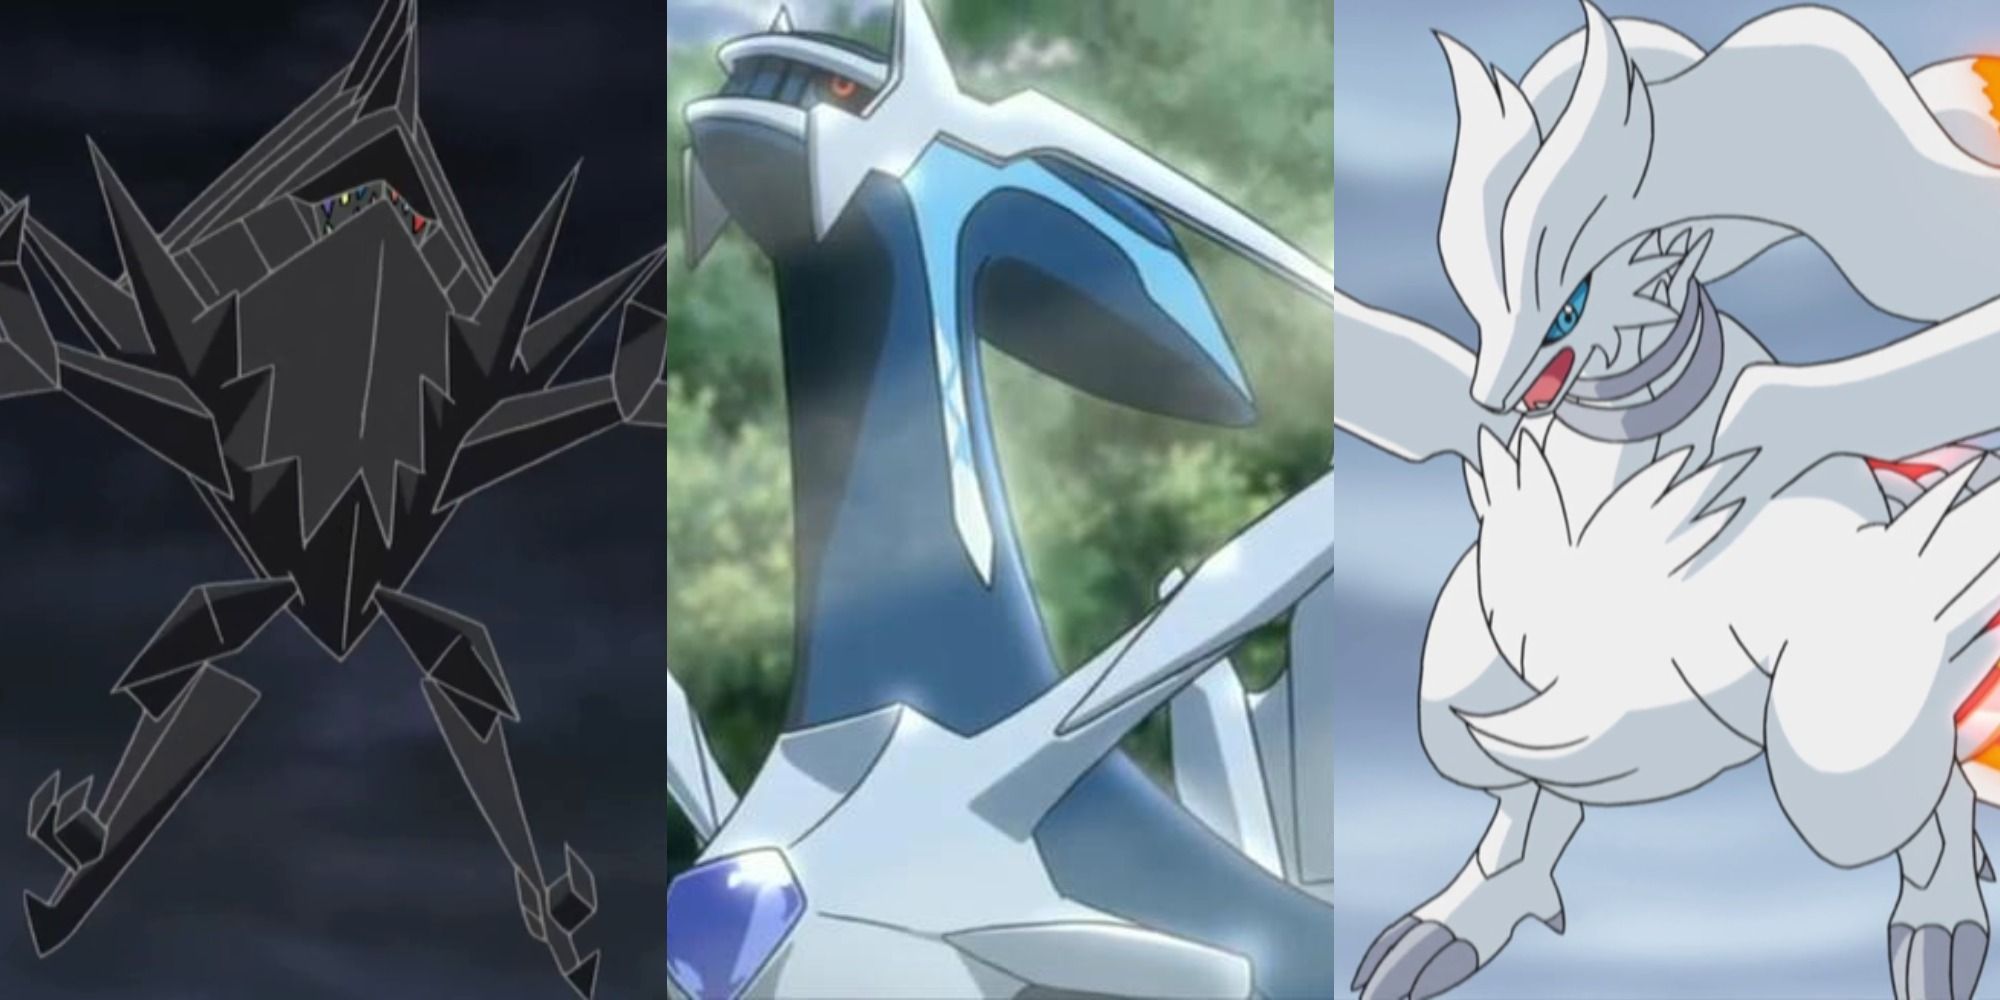 Split image showing Necrozma, Dialga, and Reshiram in the Pokémon anime